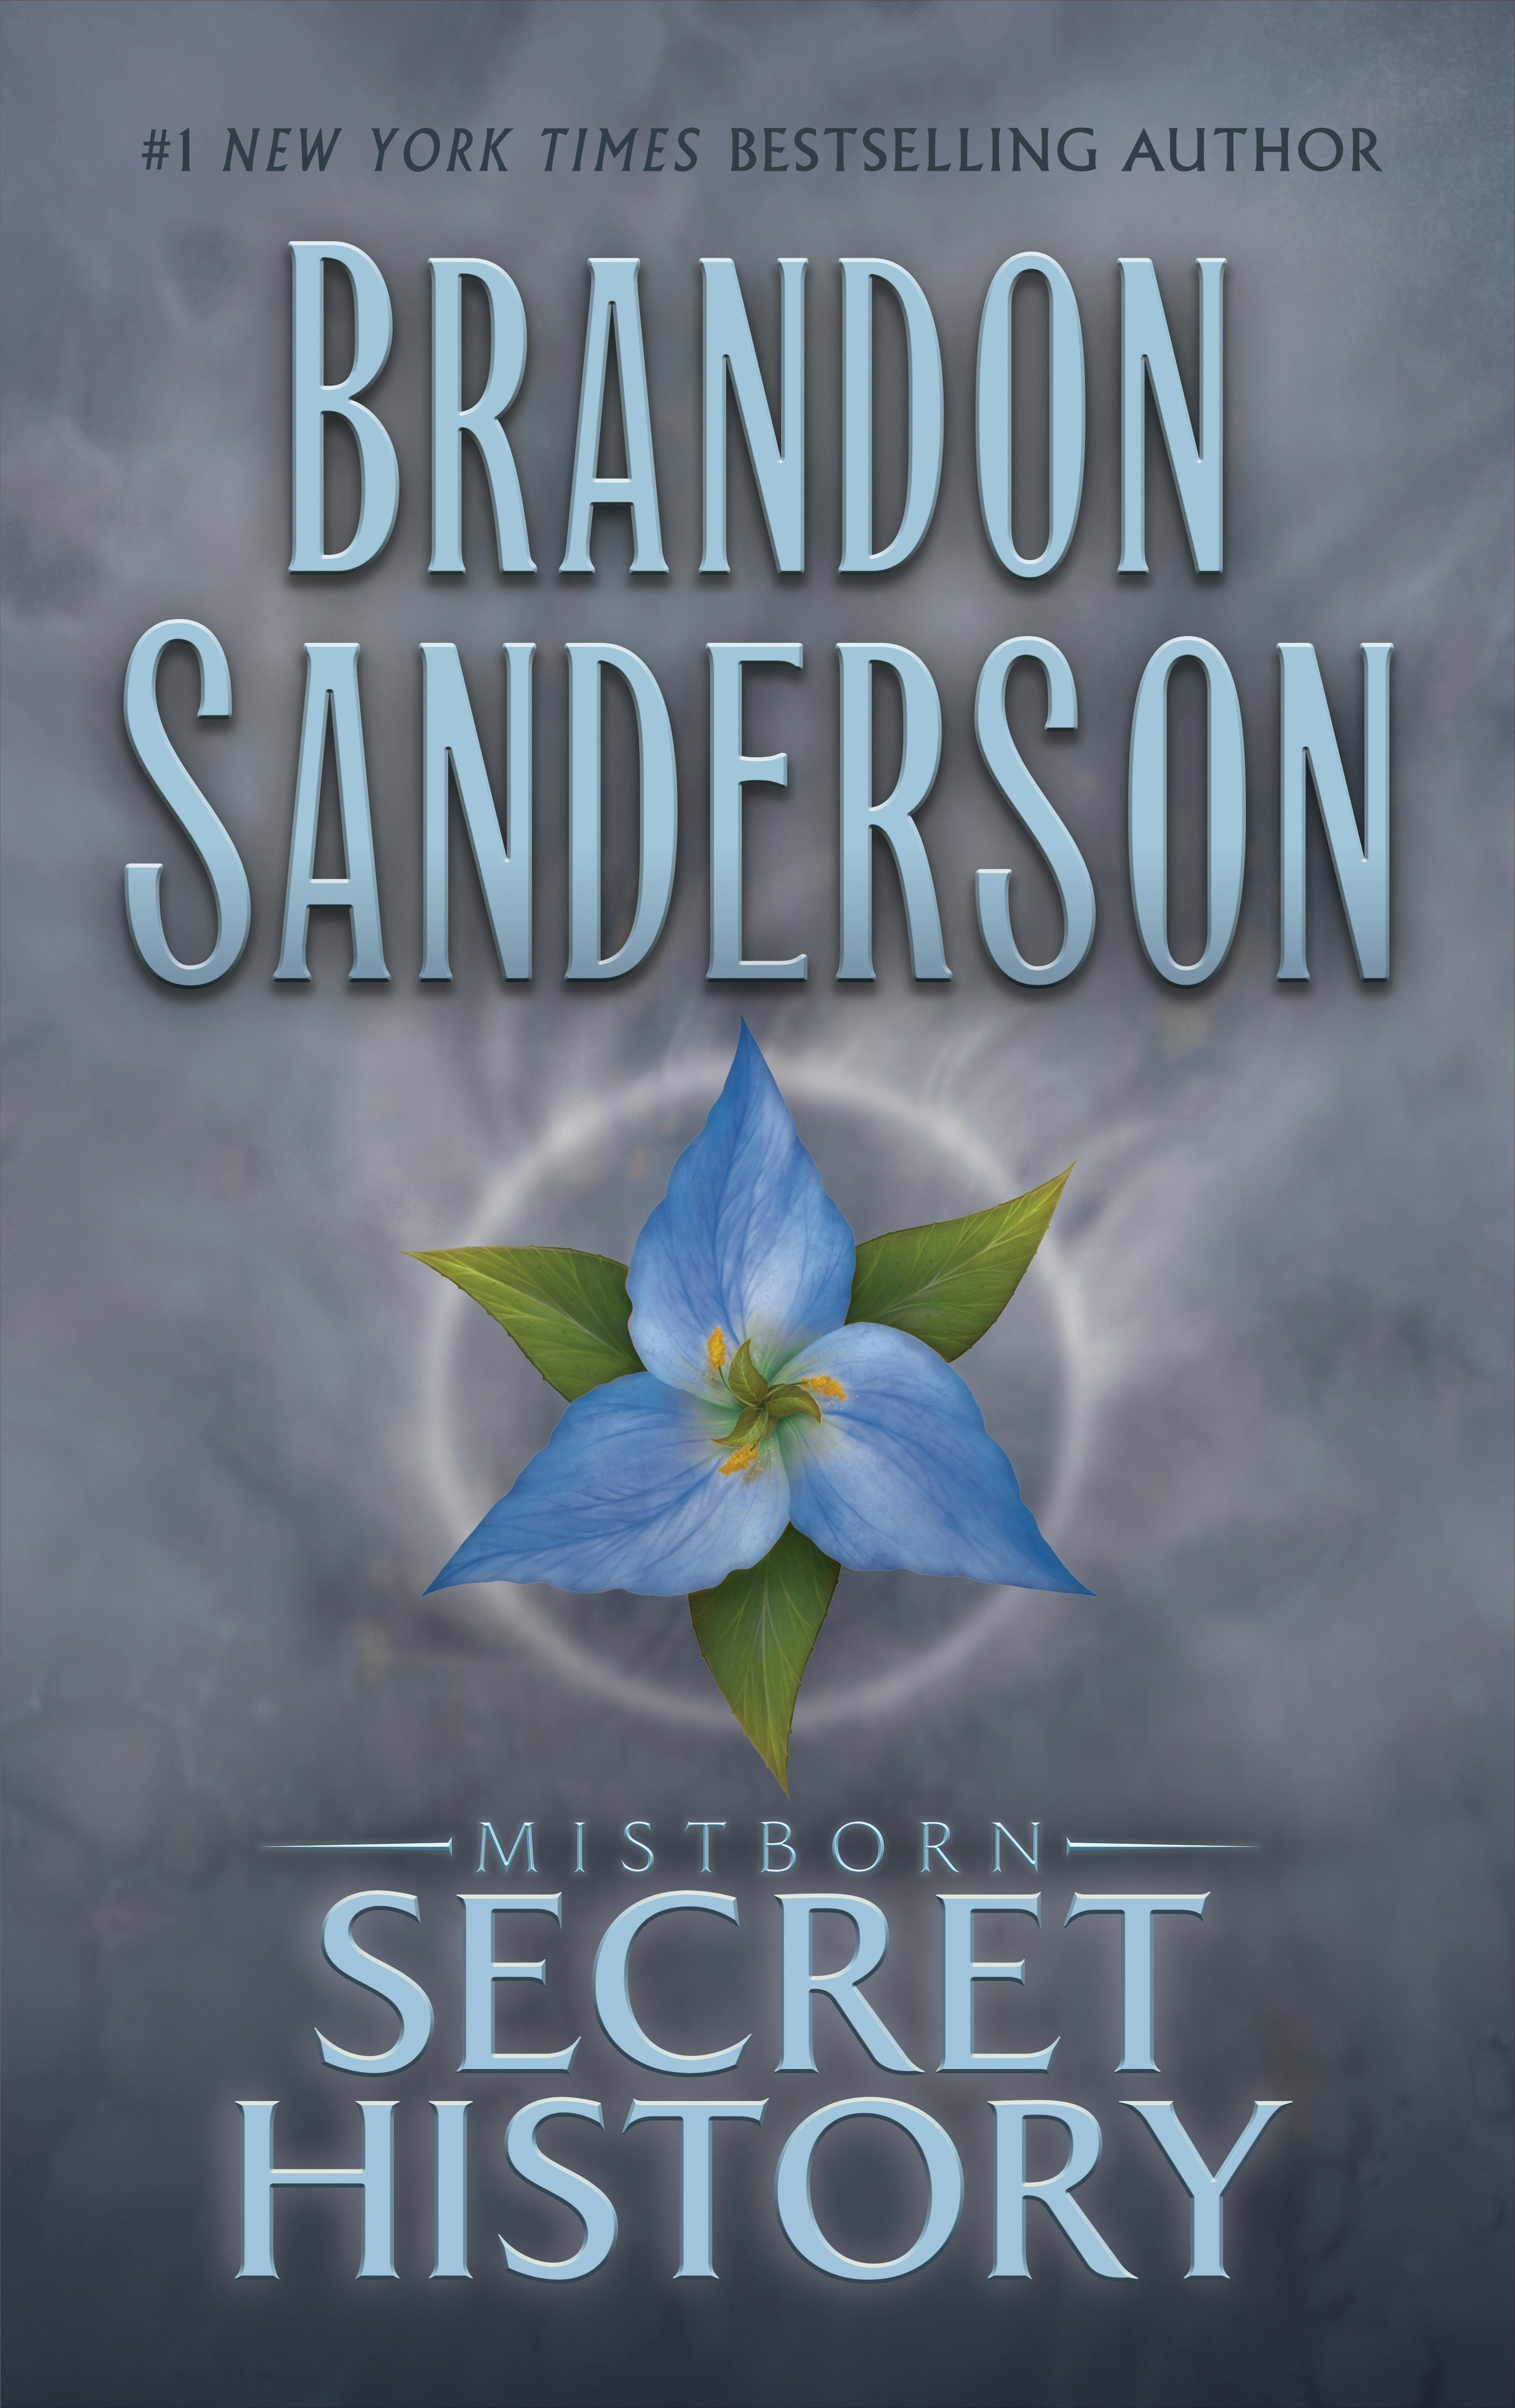 The Final Empire (Mistborn, #1) by Brandon Sanderson